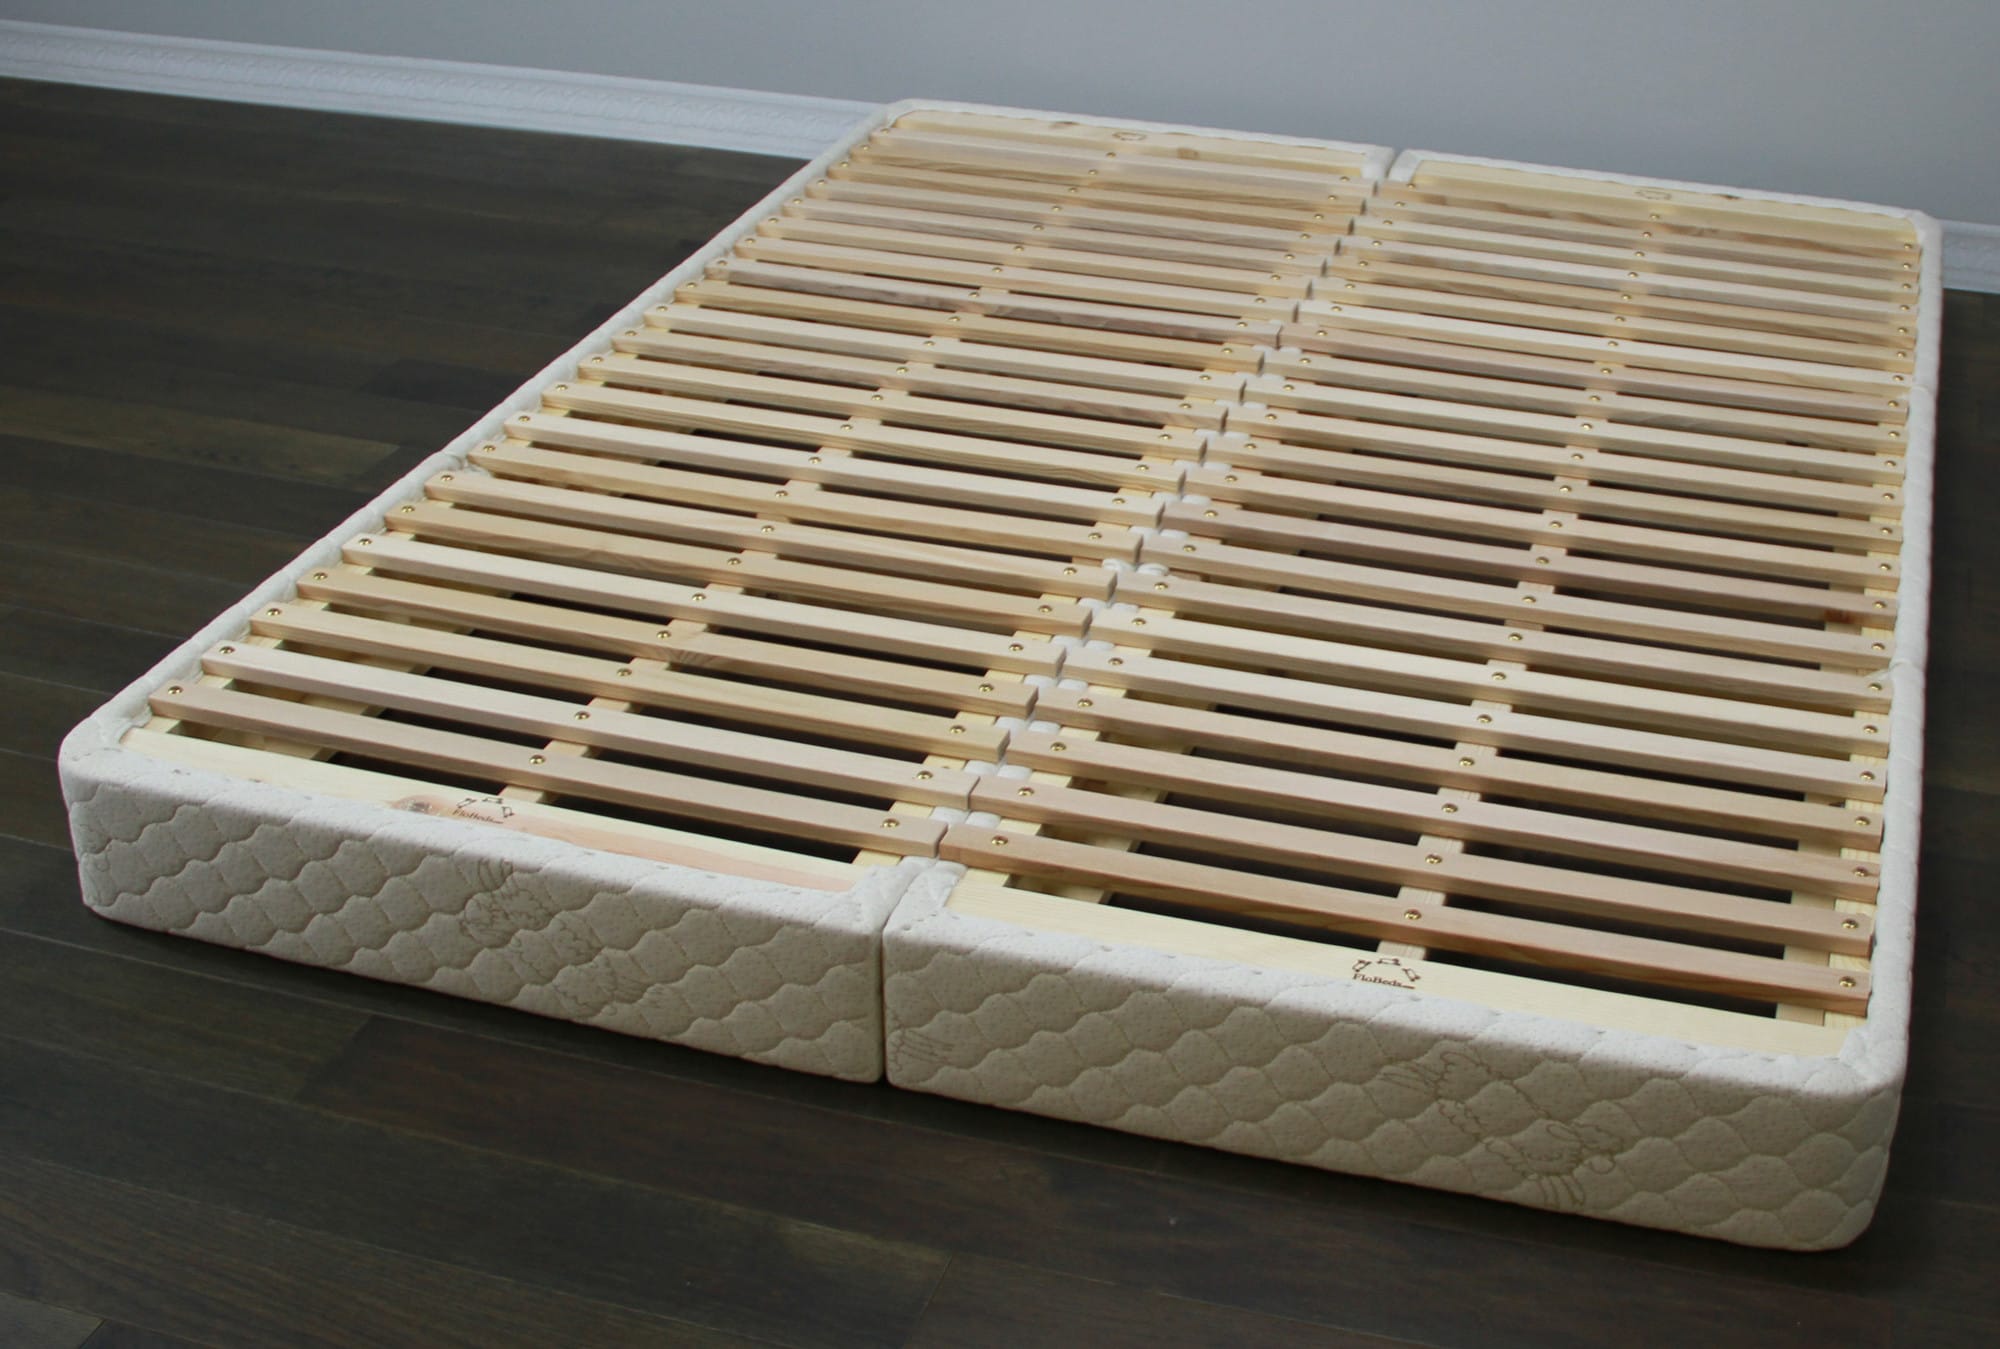 wood foundation for latex mattress